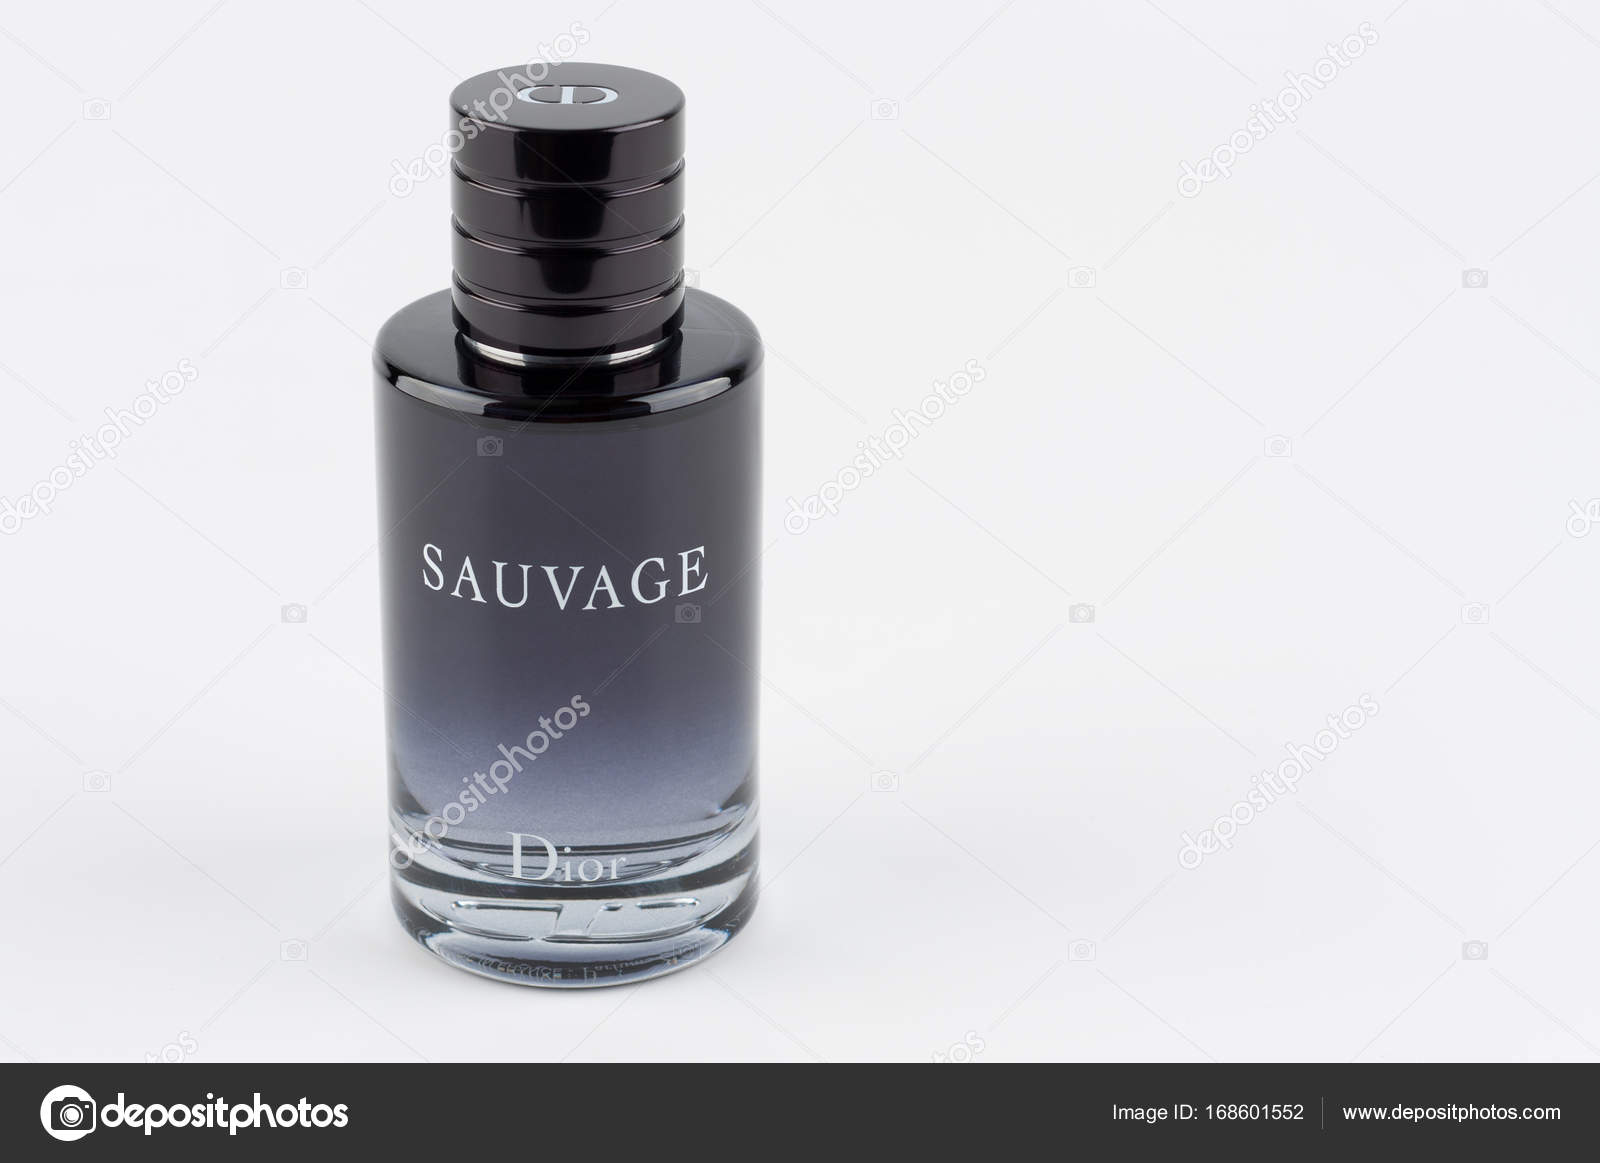 sauvage bottle